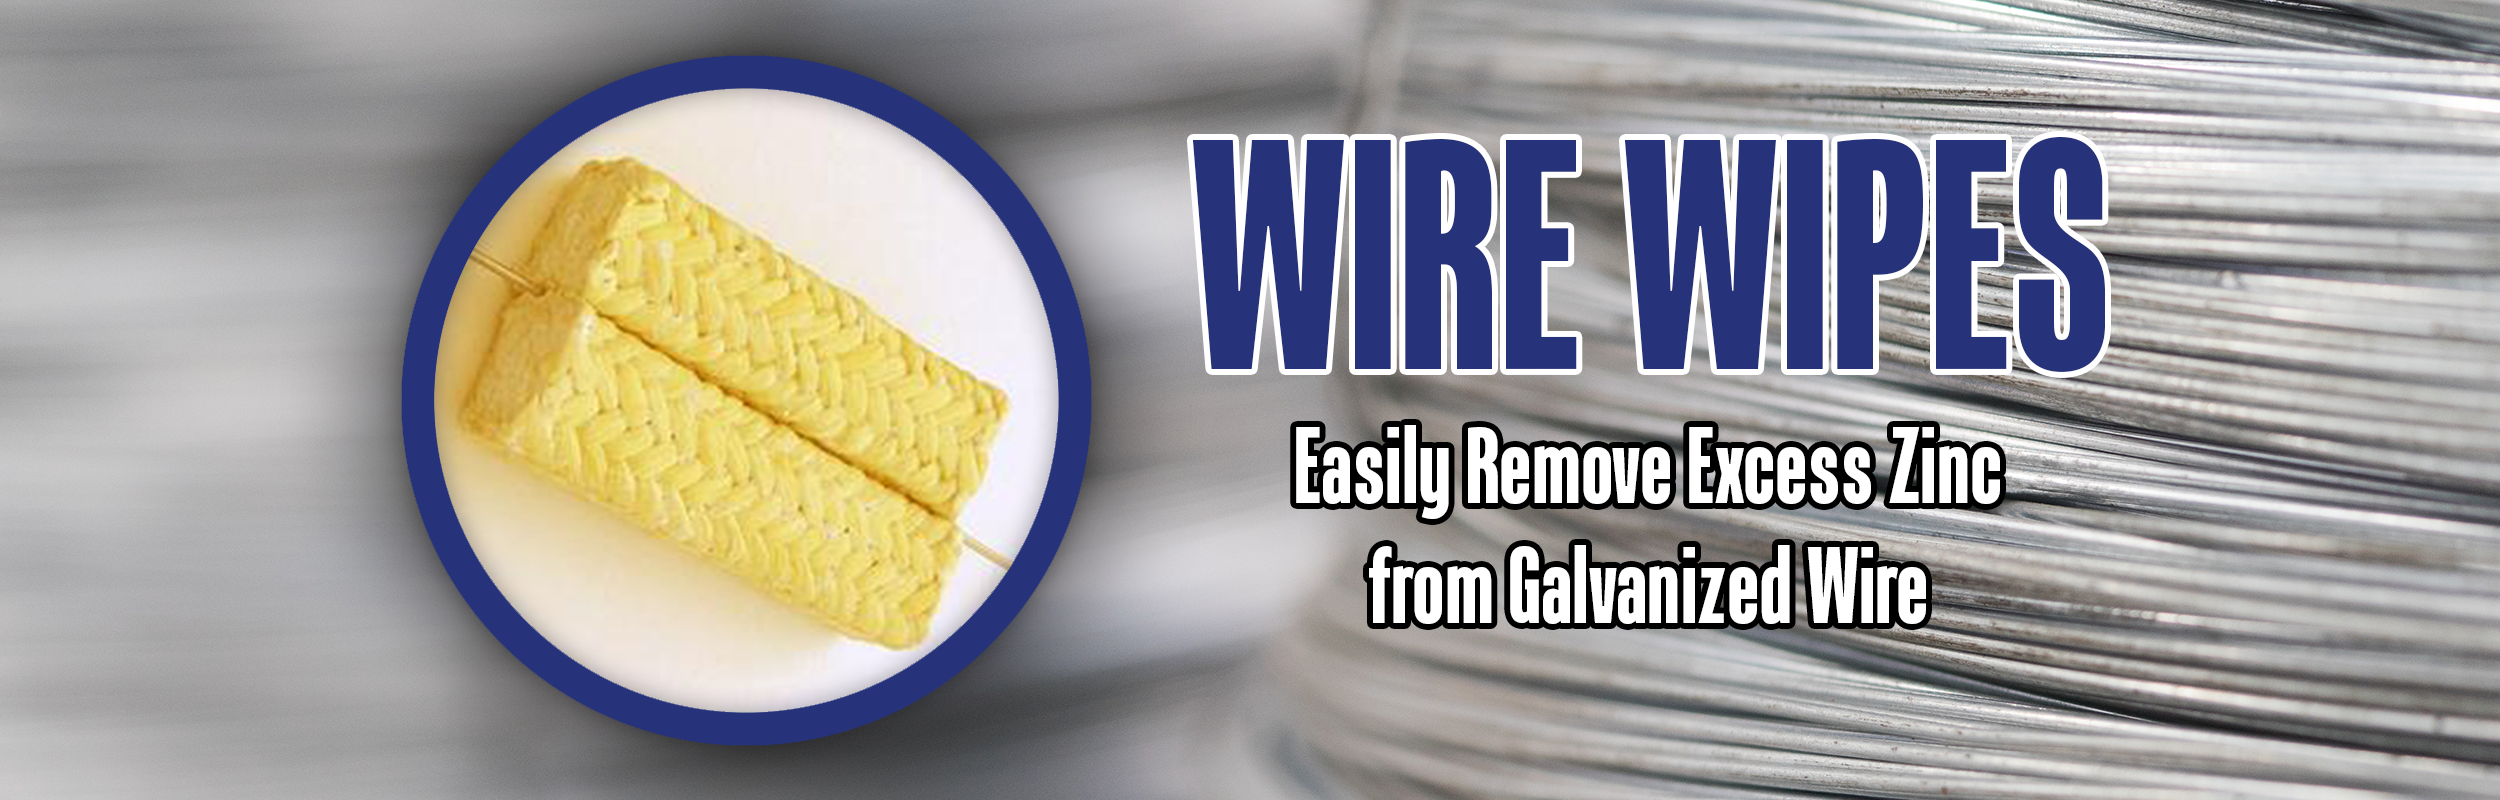 galvanized wire wipes